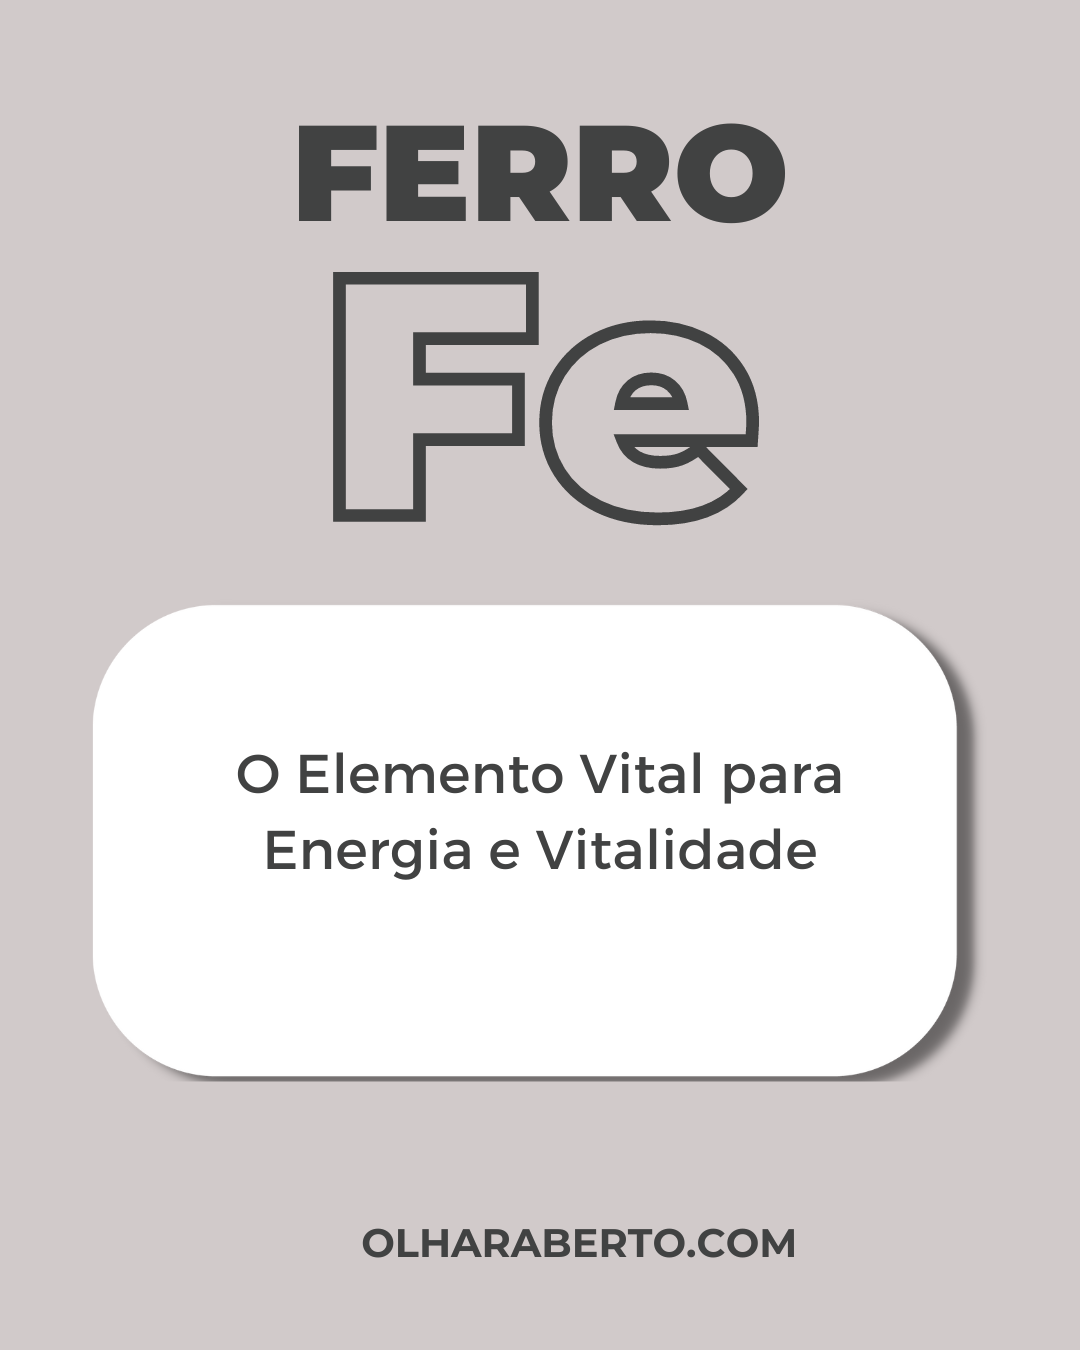 You are currently viewing Ferro: O Elemento Vital para Energia e Vitalidade